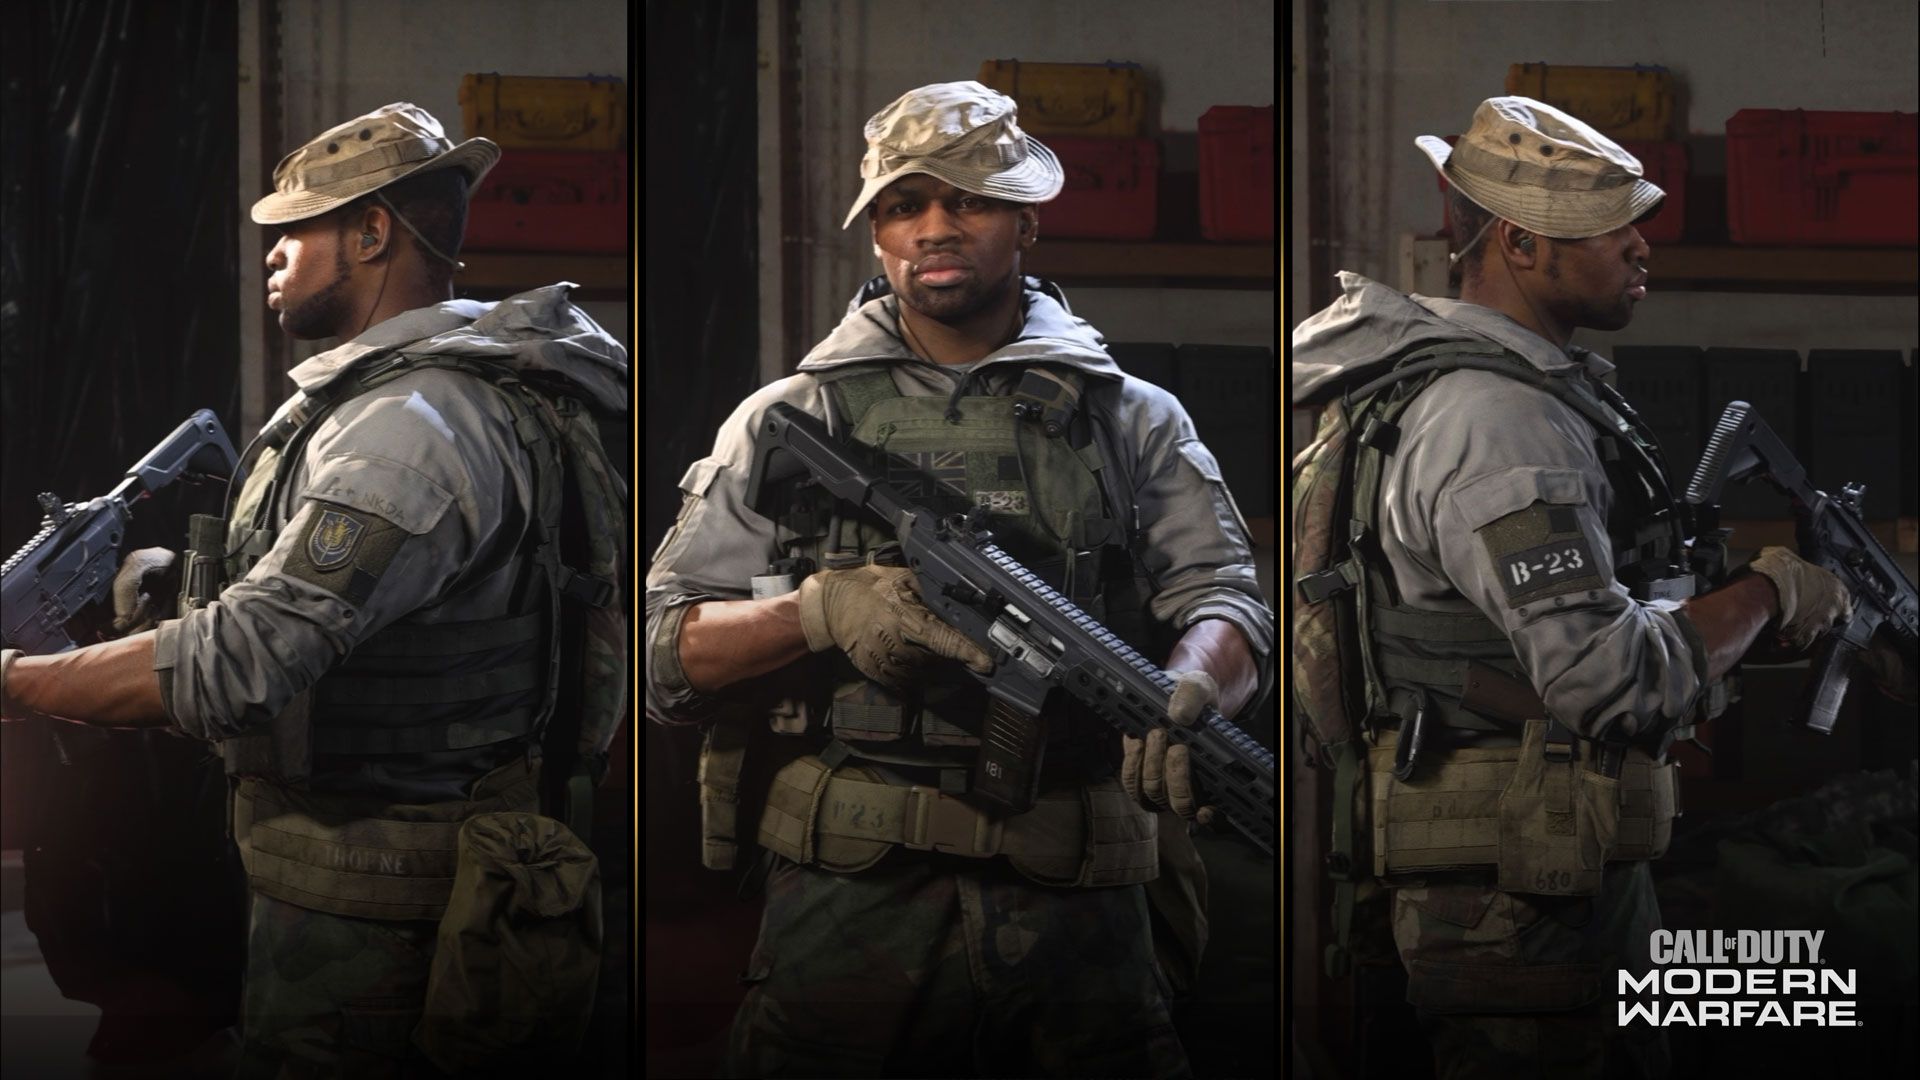 Call of Duty: Modern Warfare Operators Overview